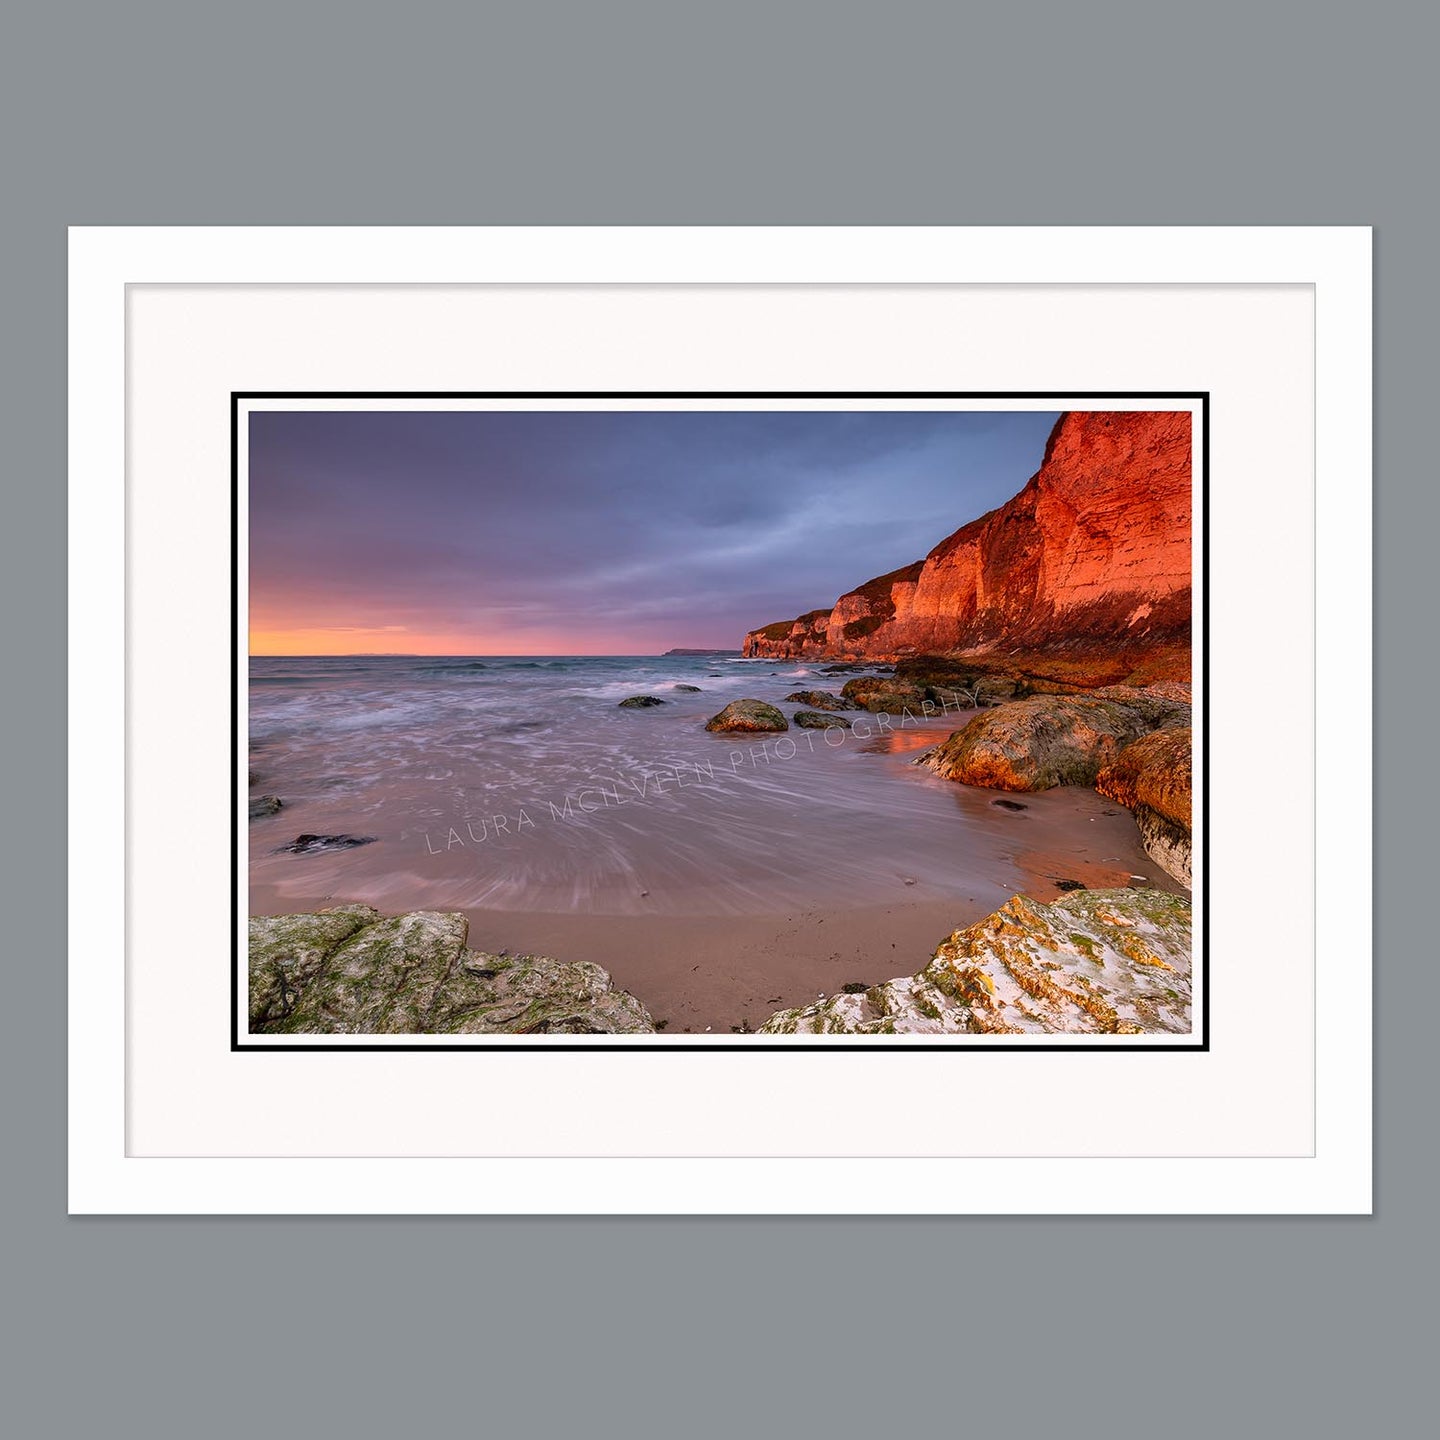 'Sunset on the rocks' - Whiterocks Beach, Portrush